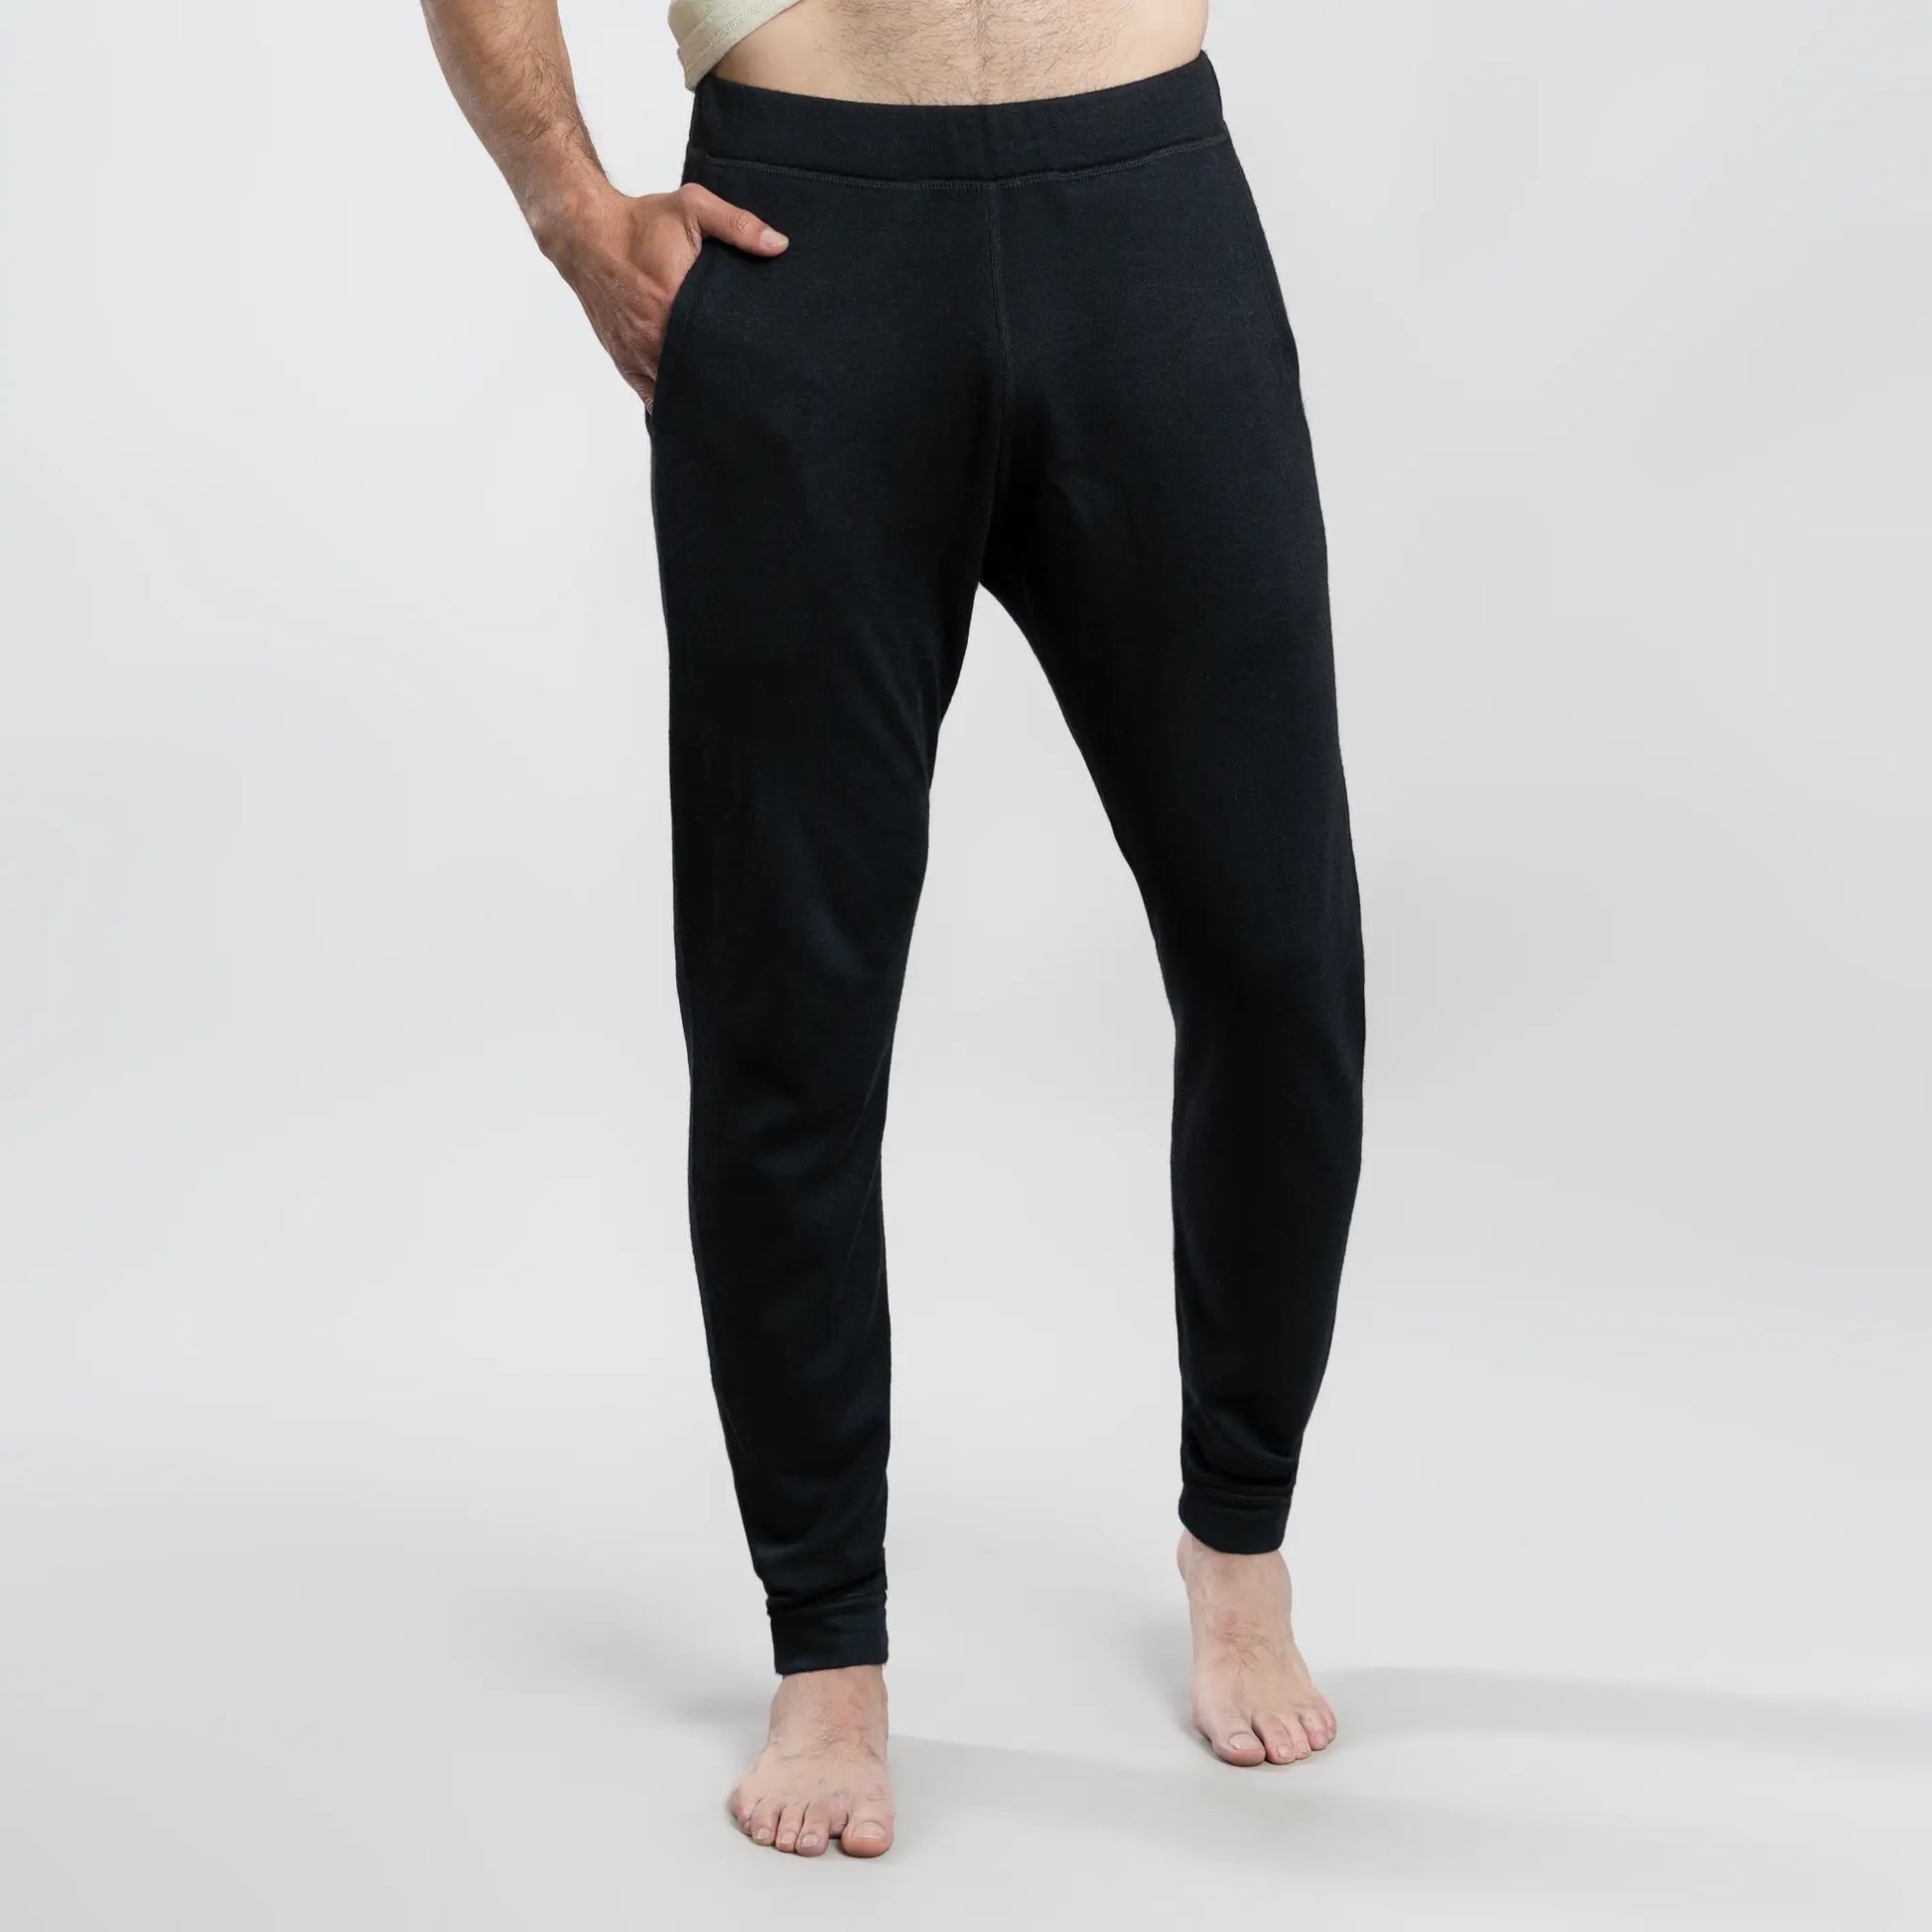 mens antiodor joggers lightweight color black